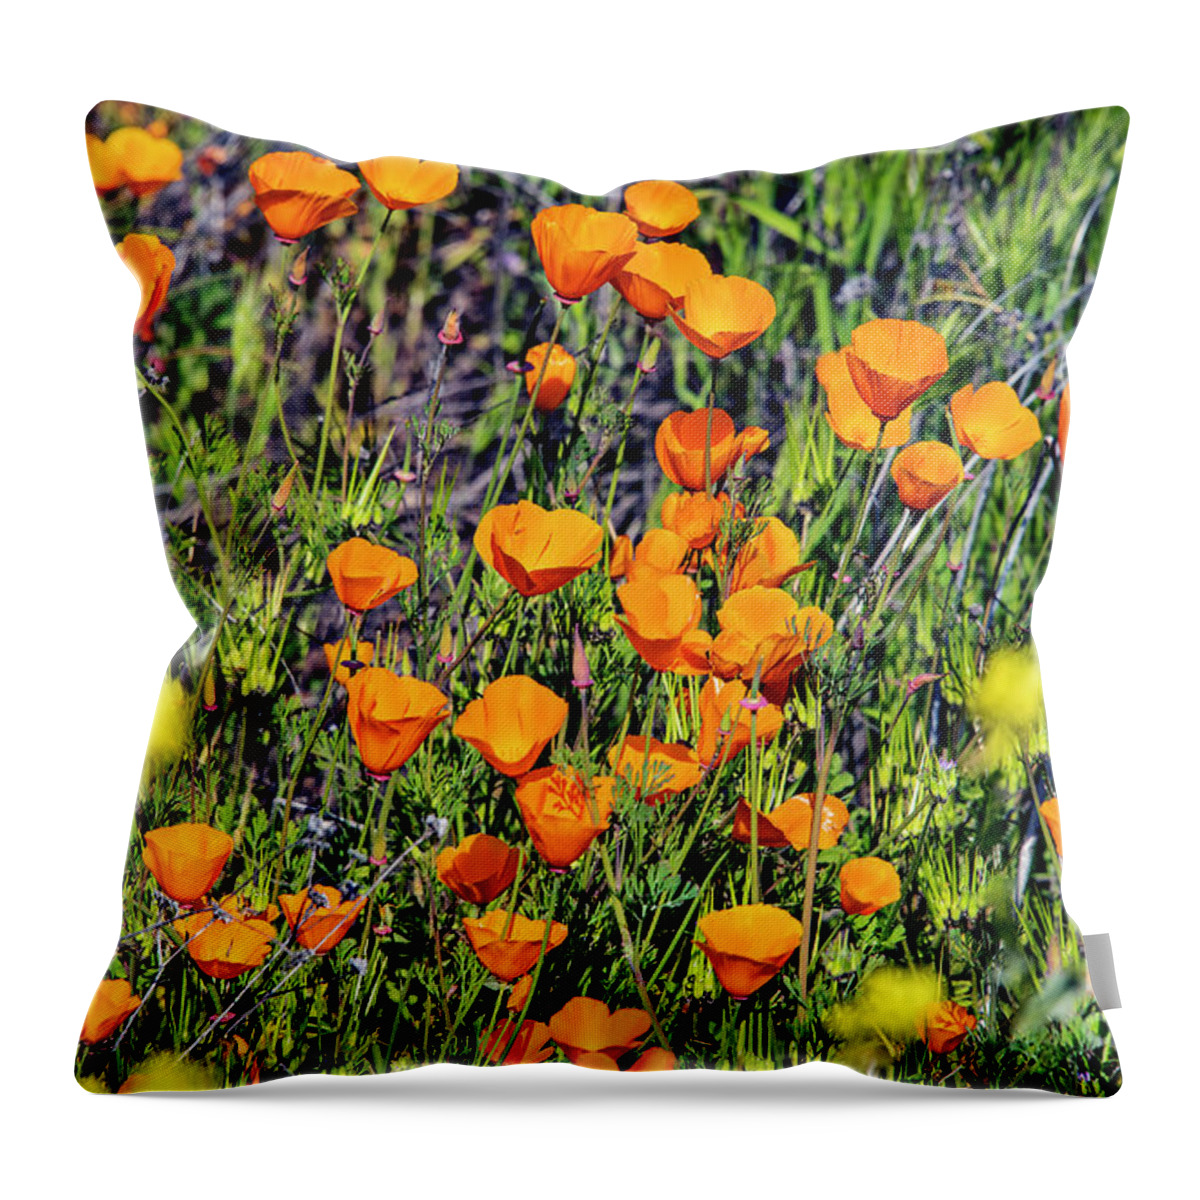 Yellow Poppies Of California Throw Pillow featuring the photograph Yellow Poppies of California by Mae Wertz